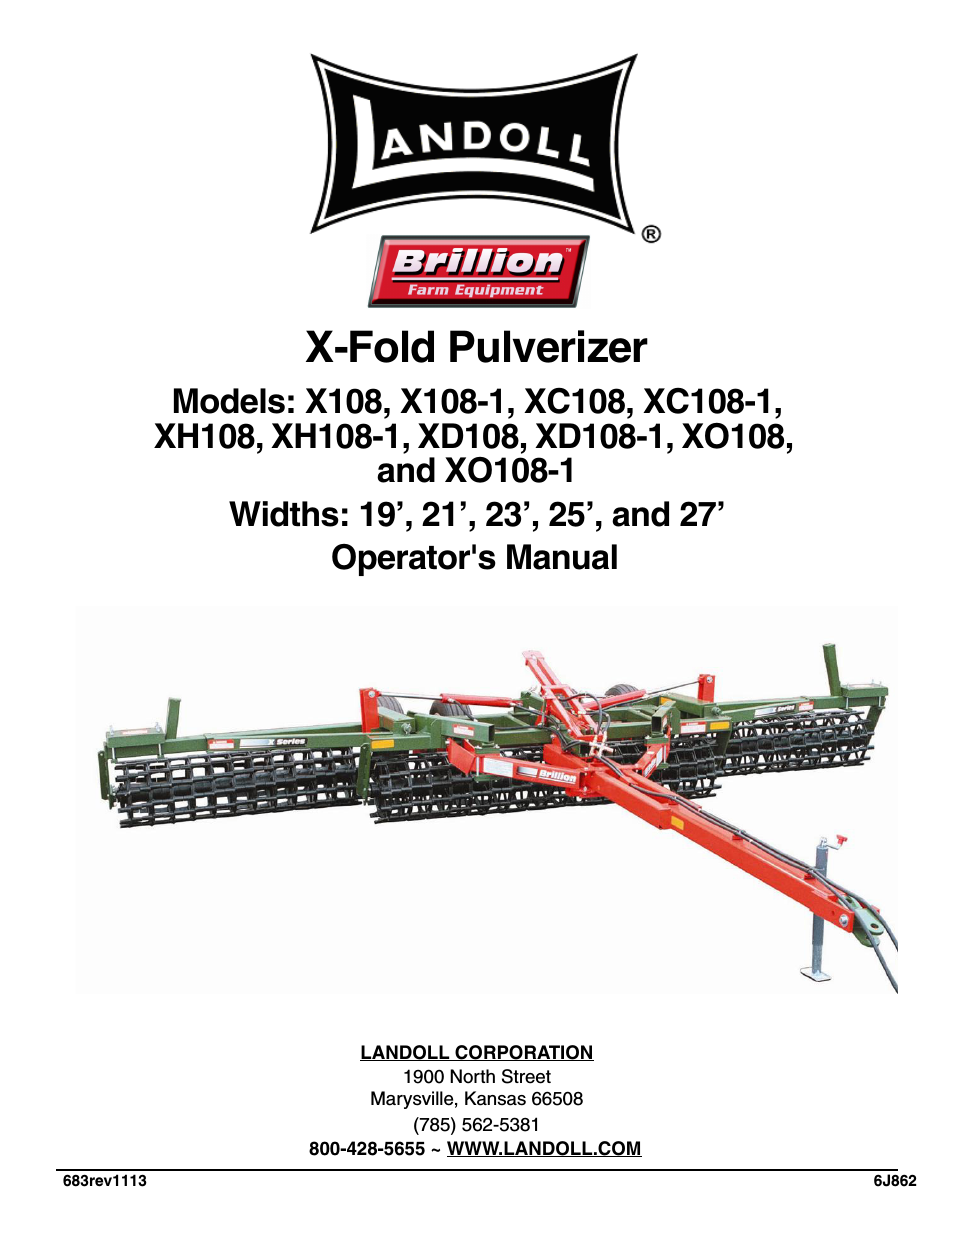 XH108/XH108-1 X-Fold Pulverizer